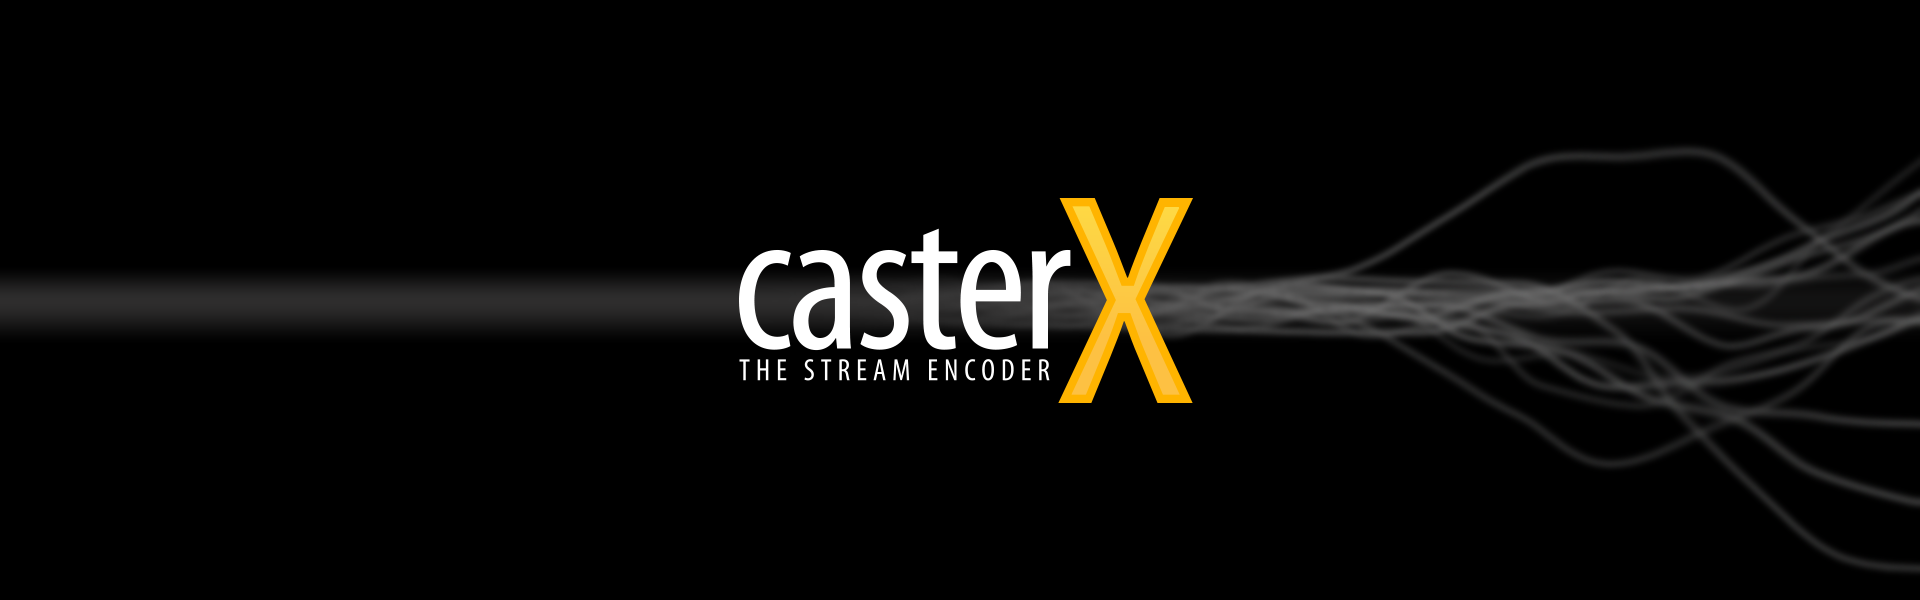 casterx-guide-banner